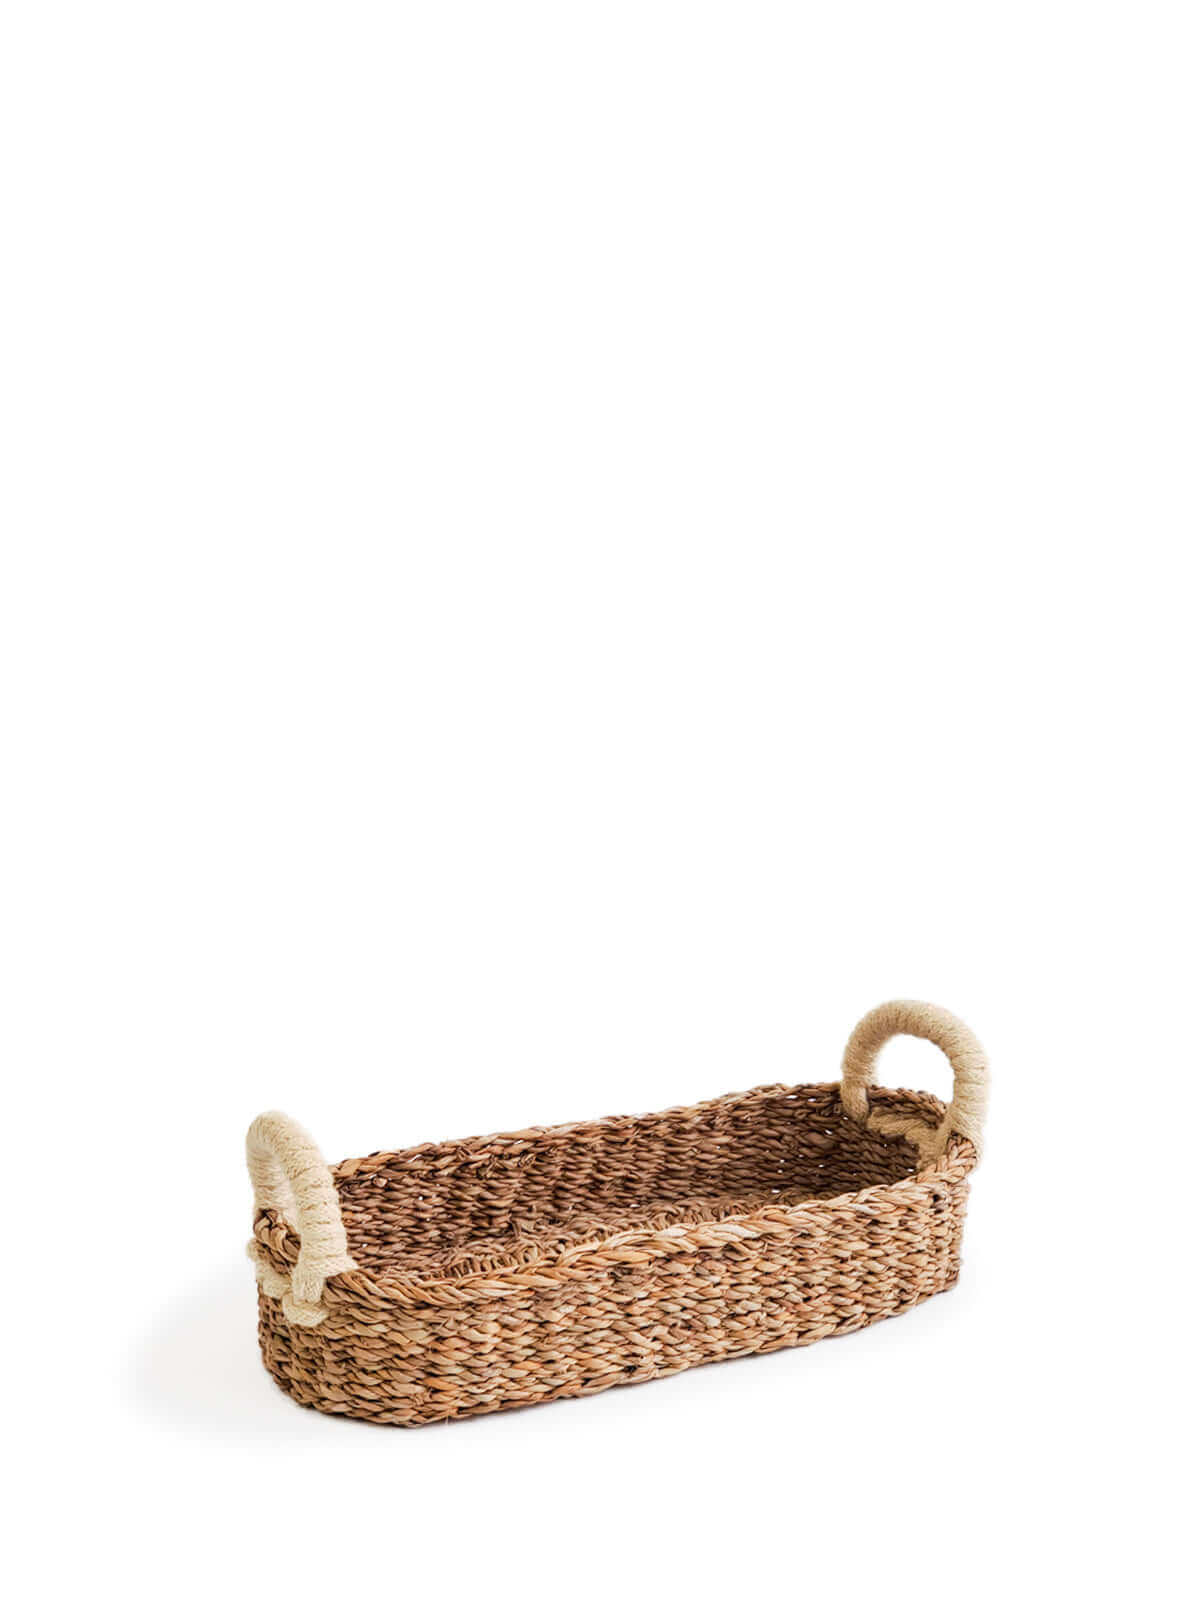 Savar Bread Basket with White Handle-7